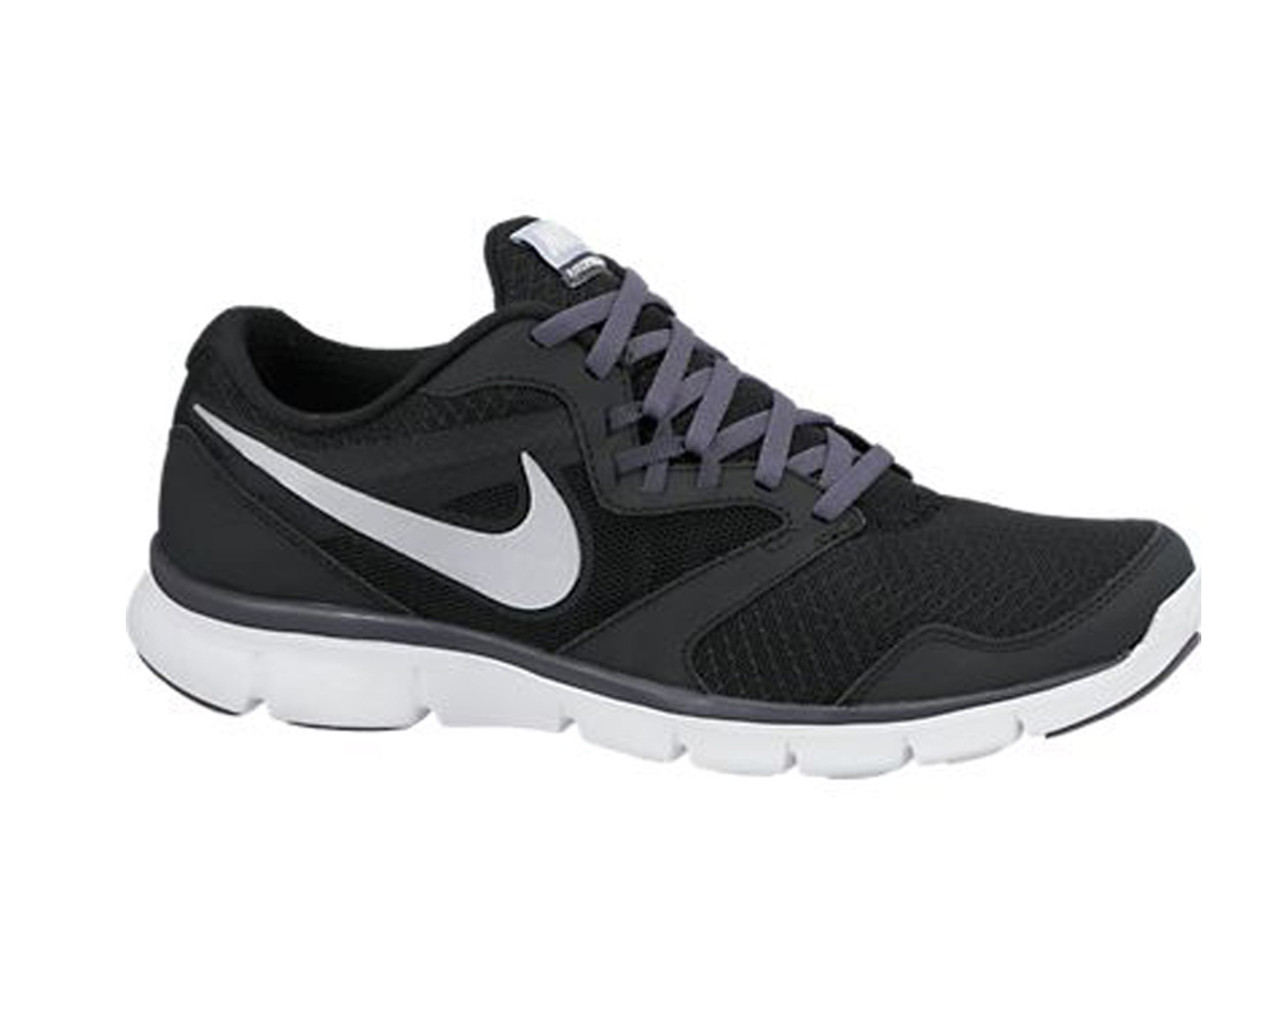 Corte Mona Lisa Persuasión Nike Women's Flex Experience Run 3 Running Shoes - Black/Dark Grey/Metallic  Silver | Discount Nike Ladies Athletic & More - Shoolu.com | Shoolu.com